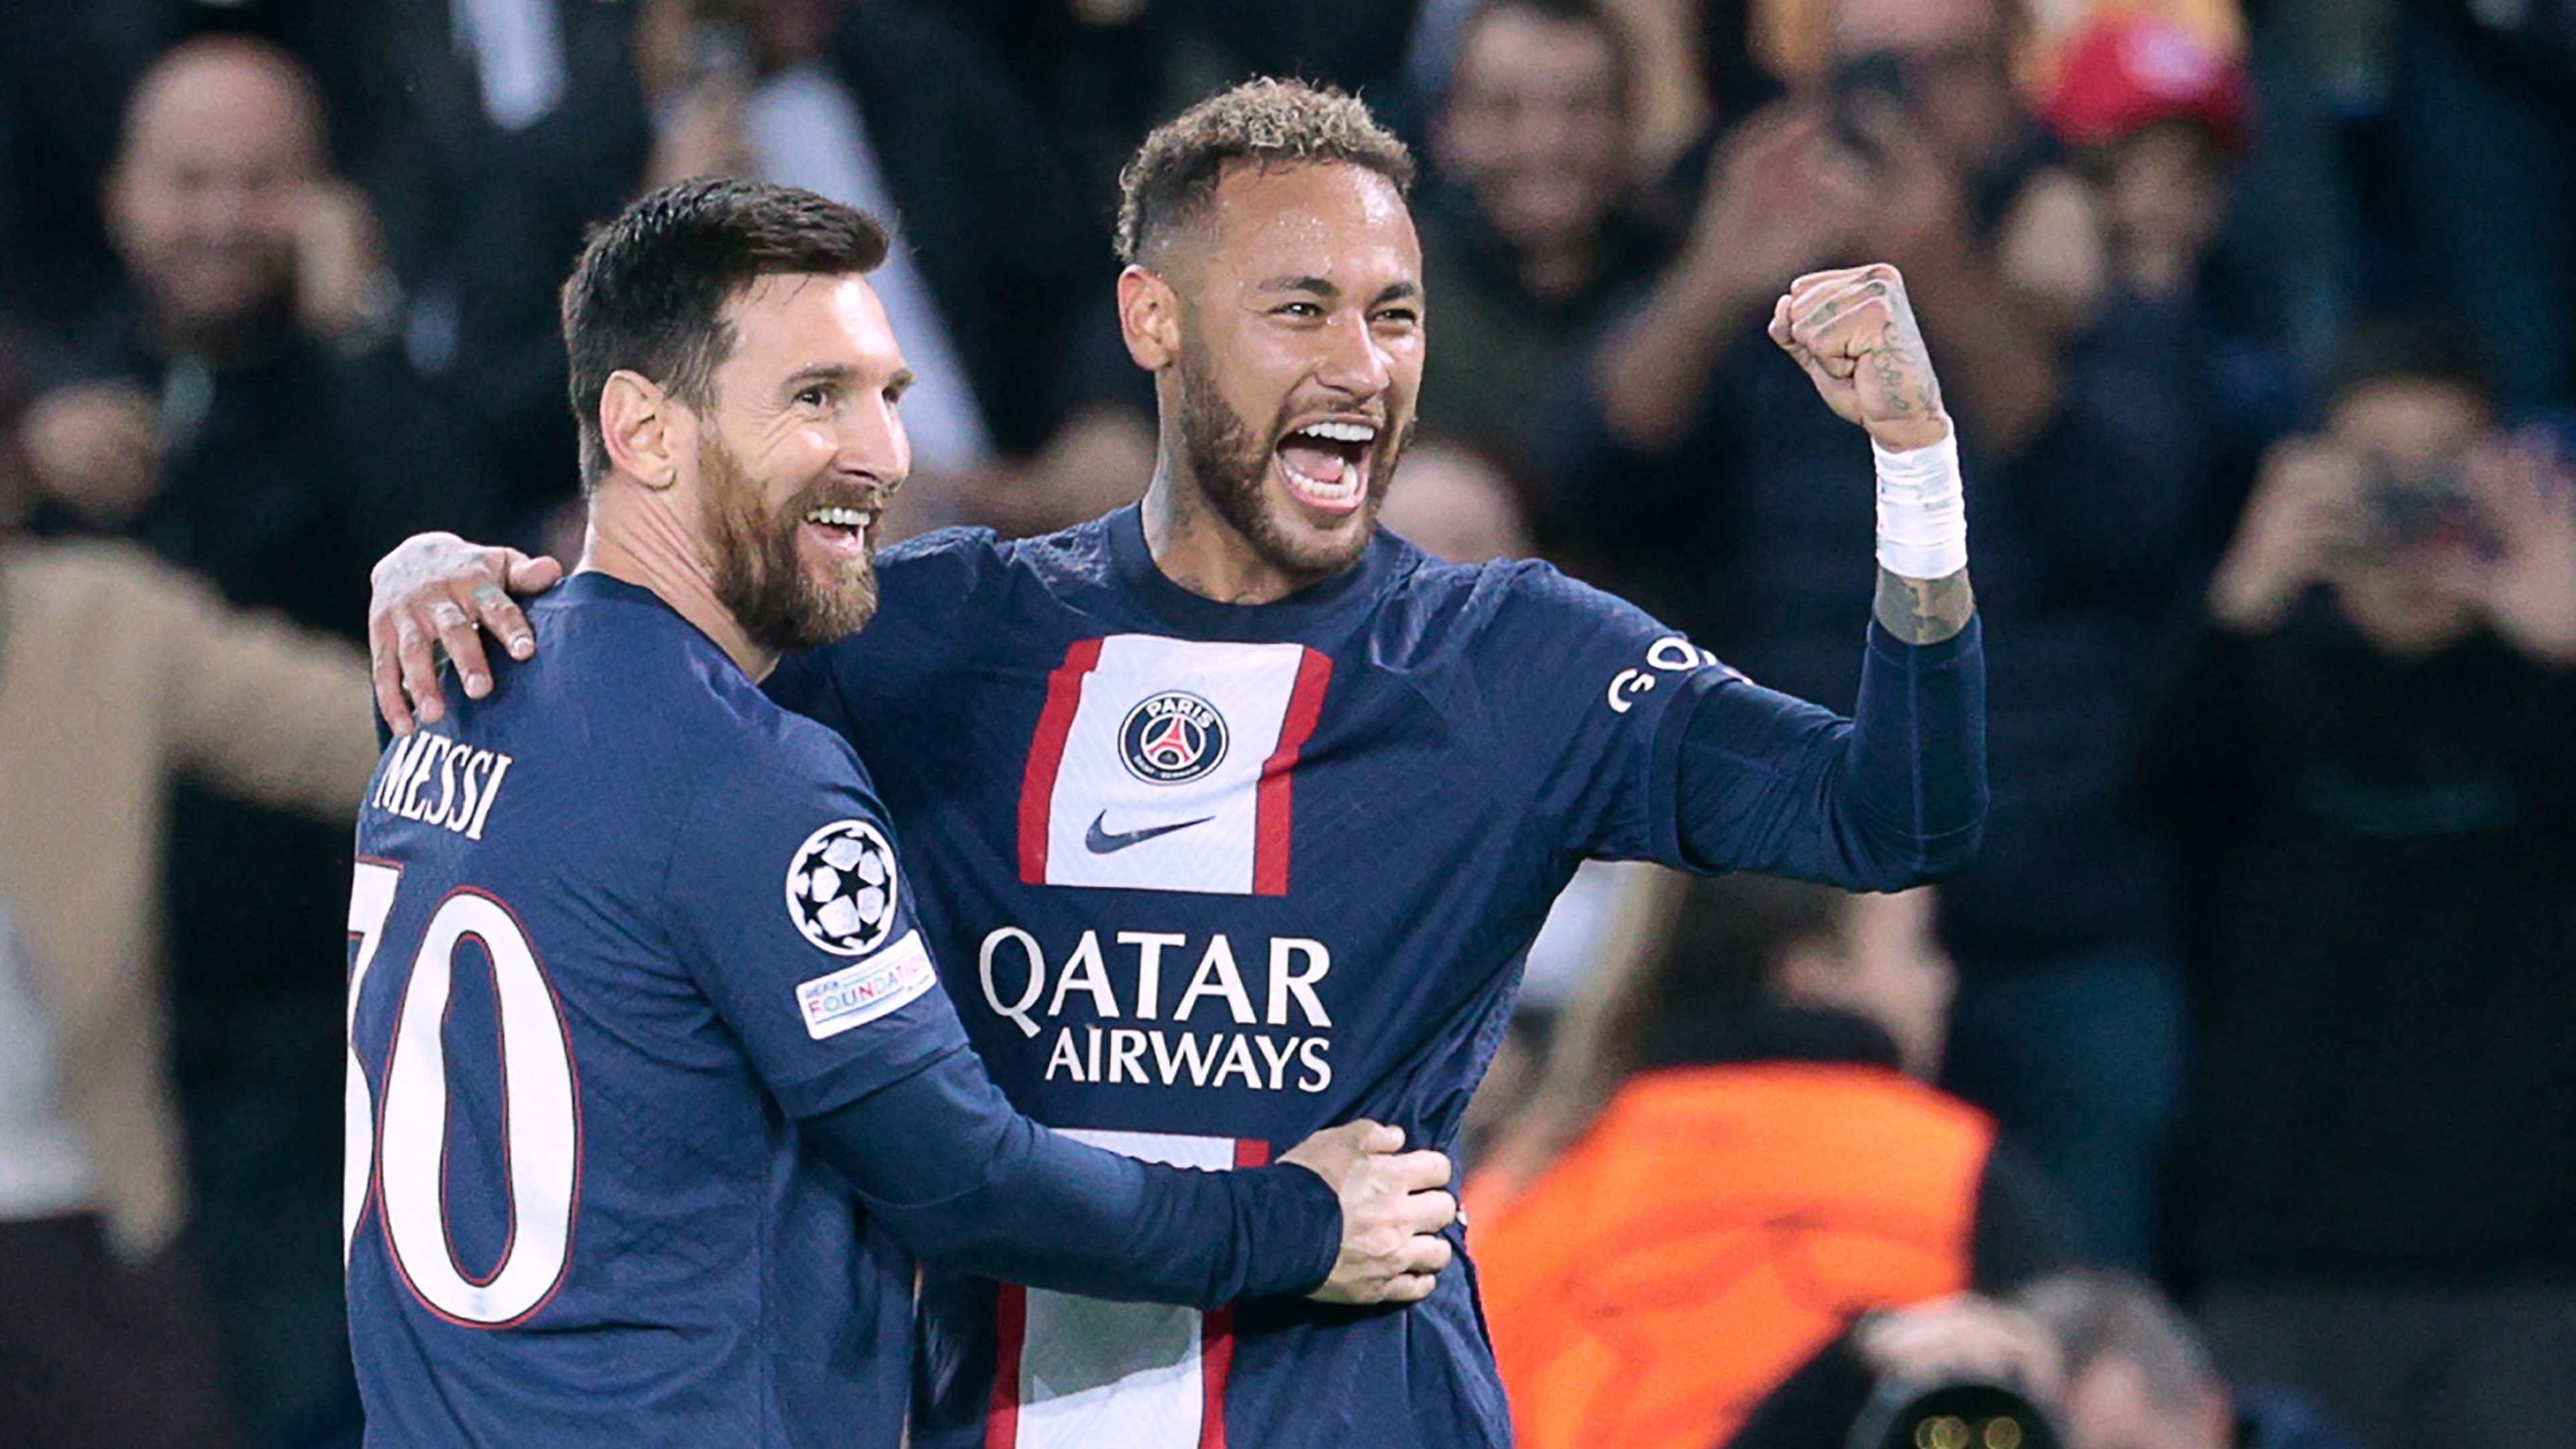 Lionel Messi obsessed with goals, Neymar is Cirque du Soleil' – Dani Alves explains why PSG superstars are 'animals' | Goal.com